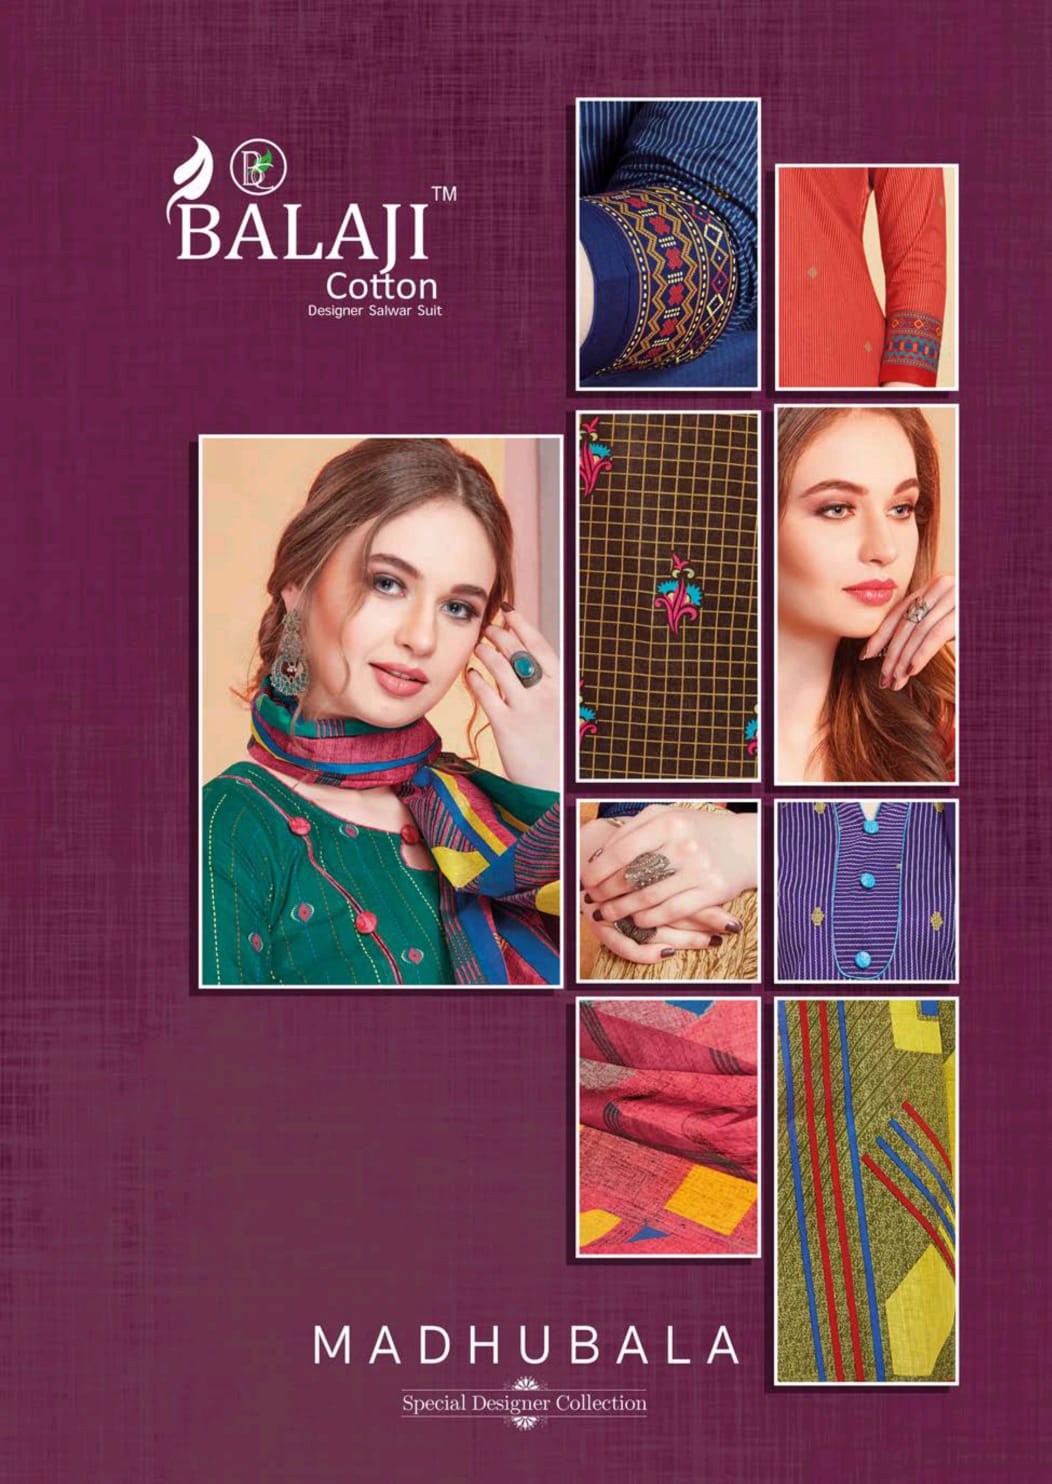 Balaji Cotton Madhubala Pure Cotton Unstitch Cotton Dress Materials Wholesaler